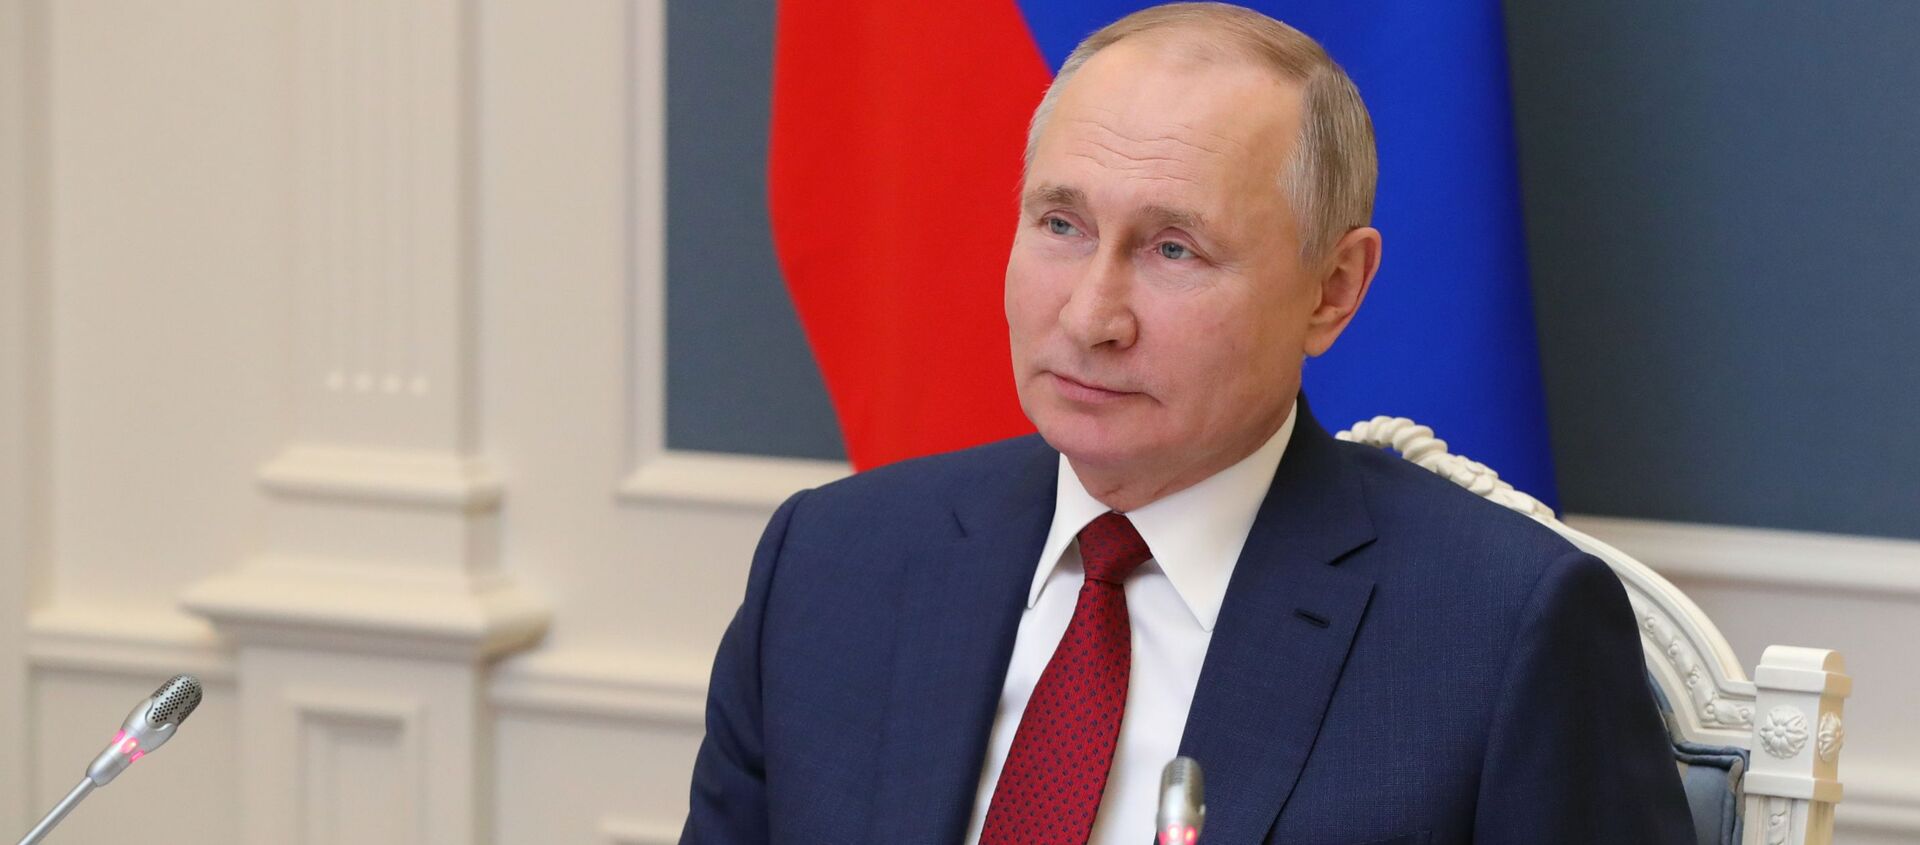 Президент РФ В. Путин выступил на сессии онлайн-форума Давосская повестка дня 2021 - Sputnik Грузия, 1920, 29.03.2021